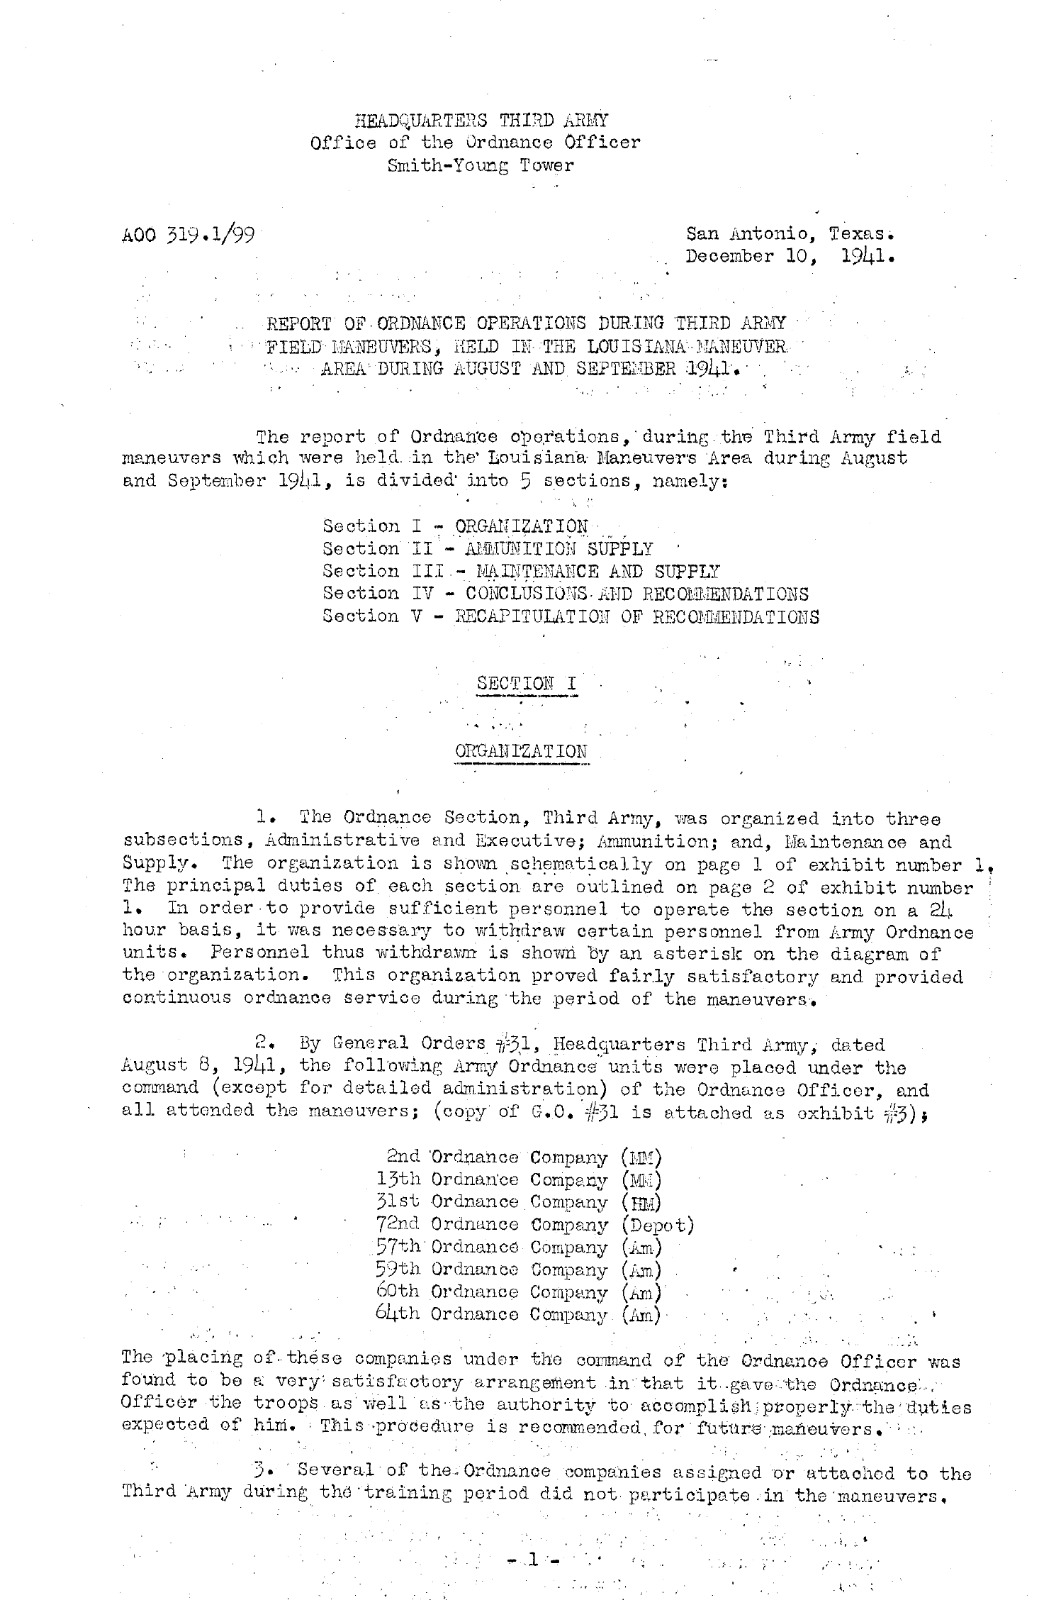 216 Page Third Army Maneuvers Aug Sep 1941 Ordnance Louisiana History on Data CD